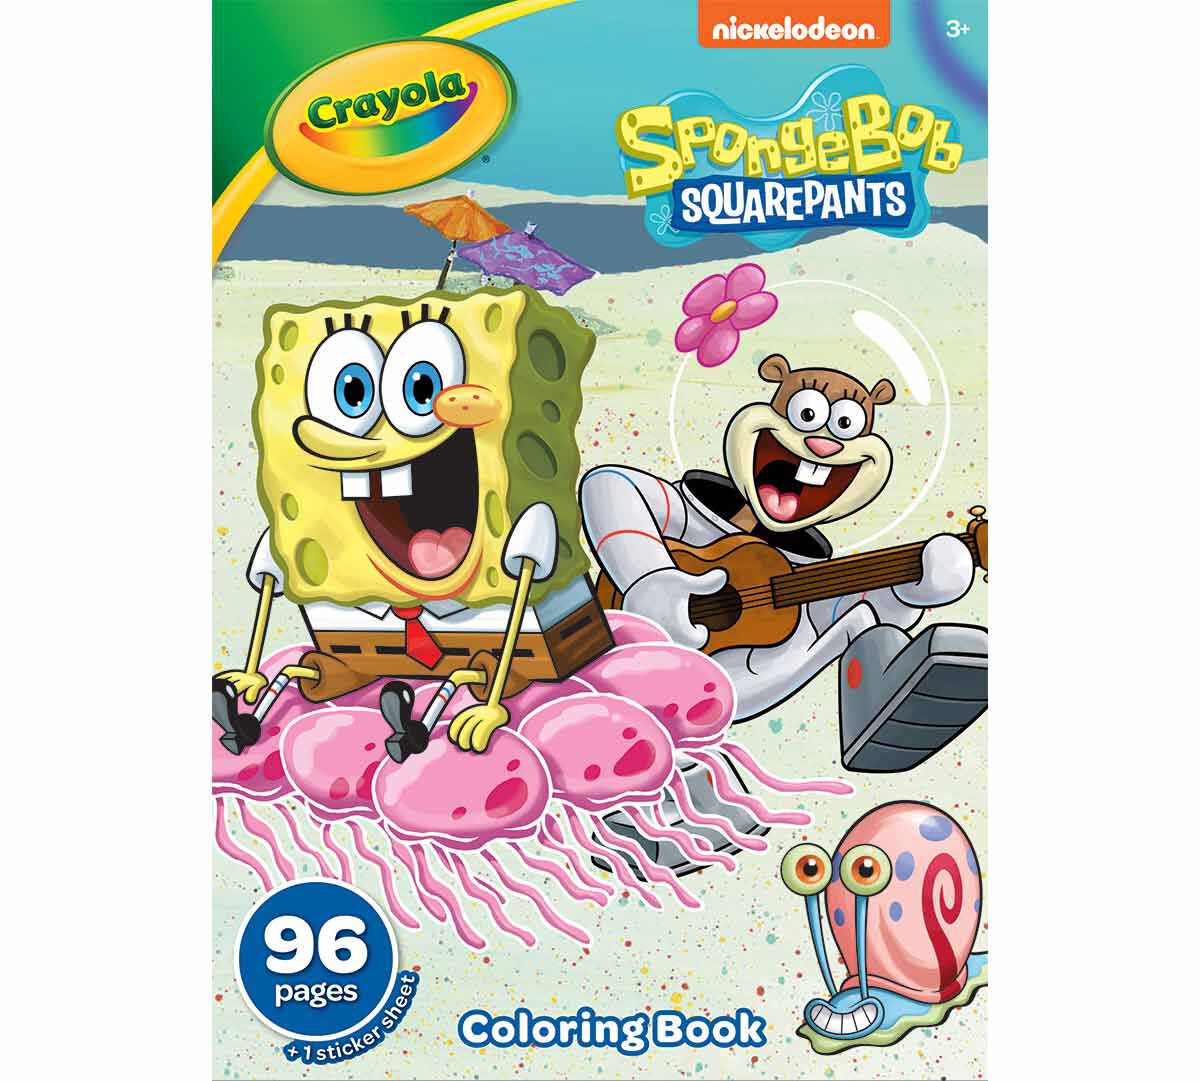 Spongebob Coloring Book & Sticker Sheet, Crayola.com